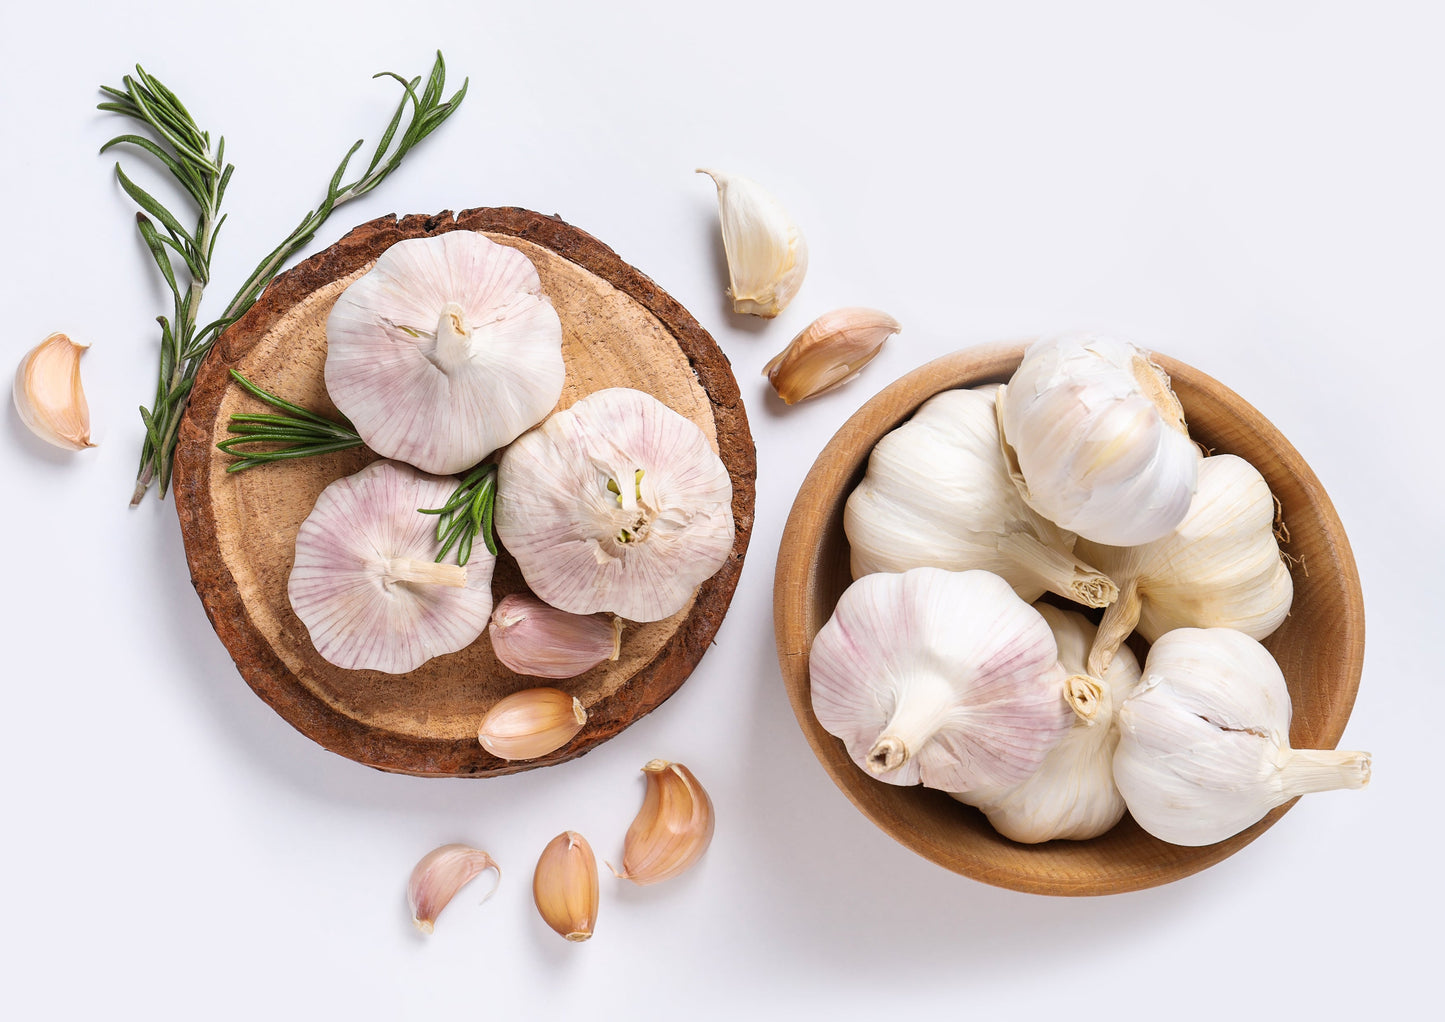 Minced Garlic – Dried Garlic Flakes, Vegan, Bulk Spice. More Intense than Garlic Powder. Rich in Vitamin B, Fiber, Selenium. Great as Seasoning, Dressing, and Natural Flavor Enhancer